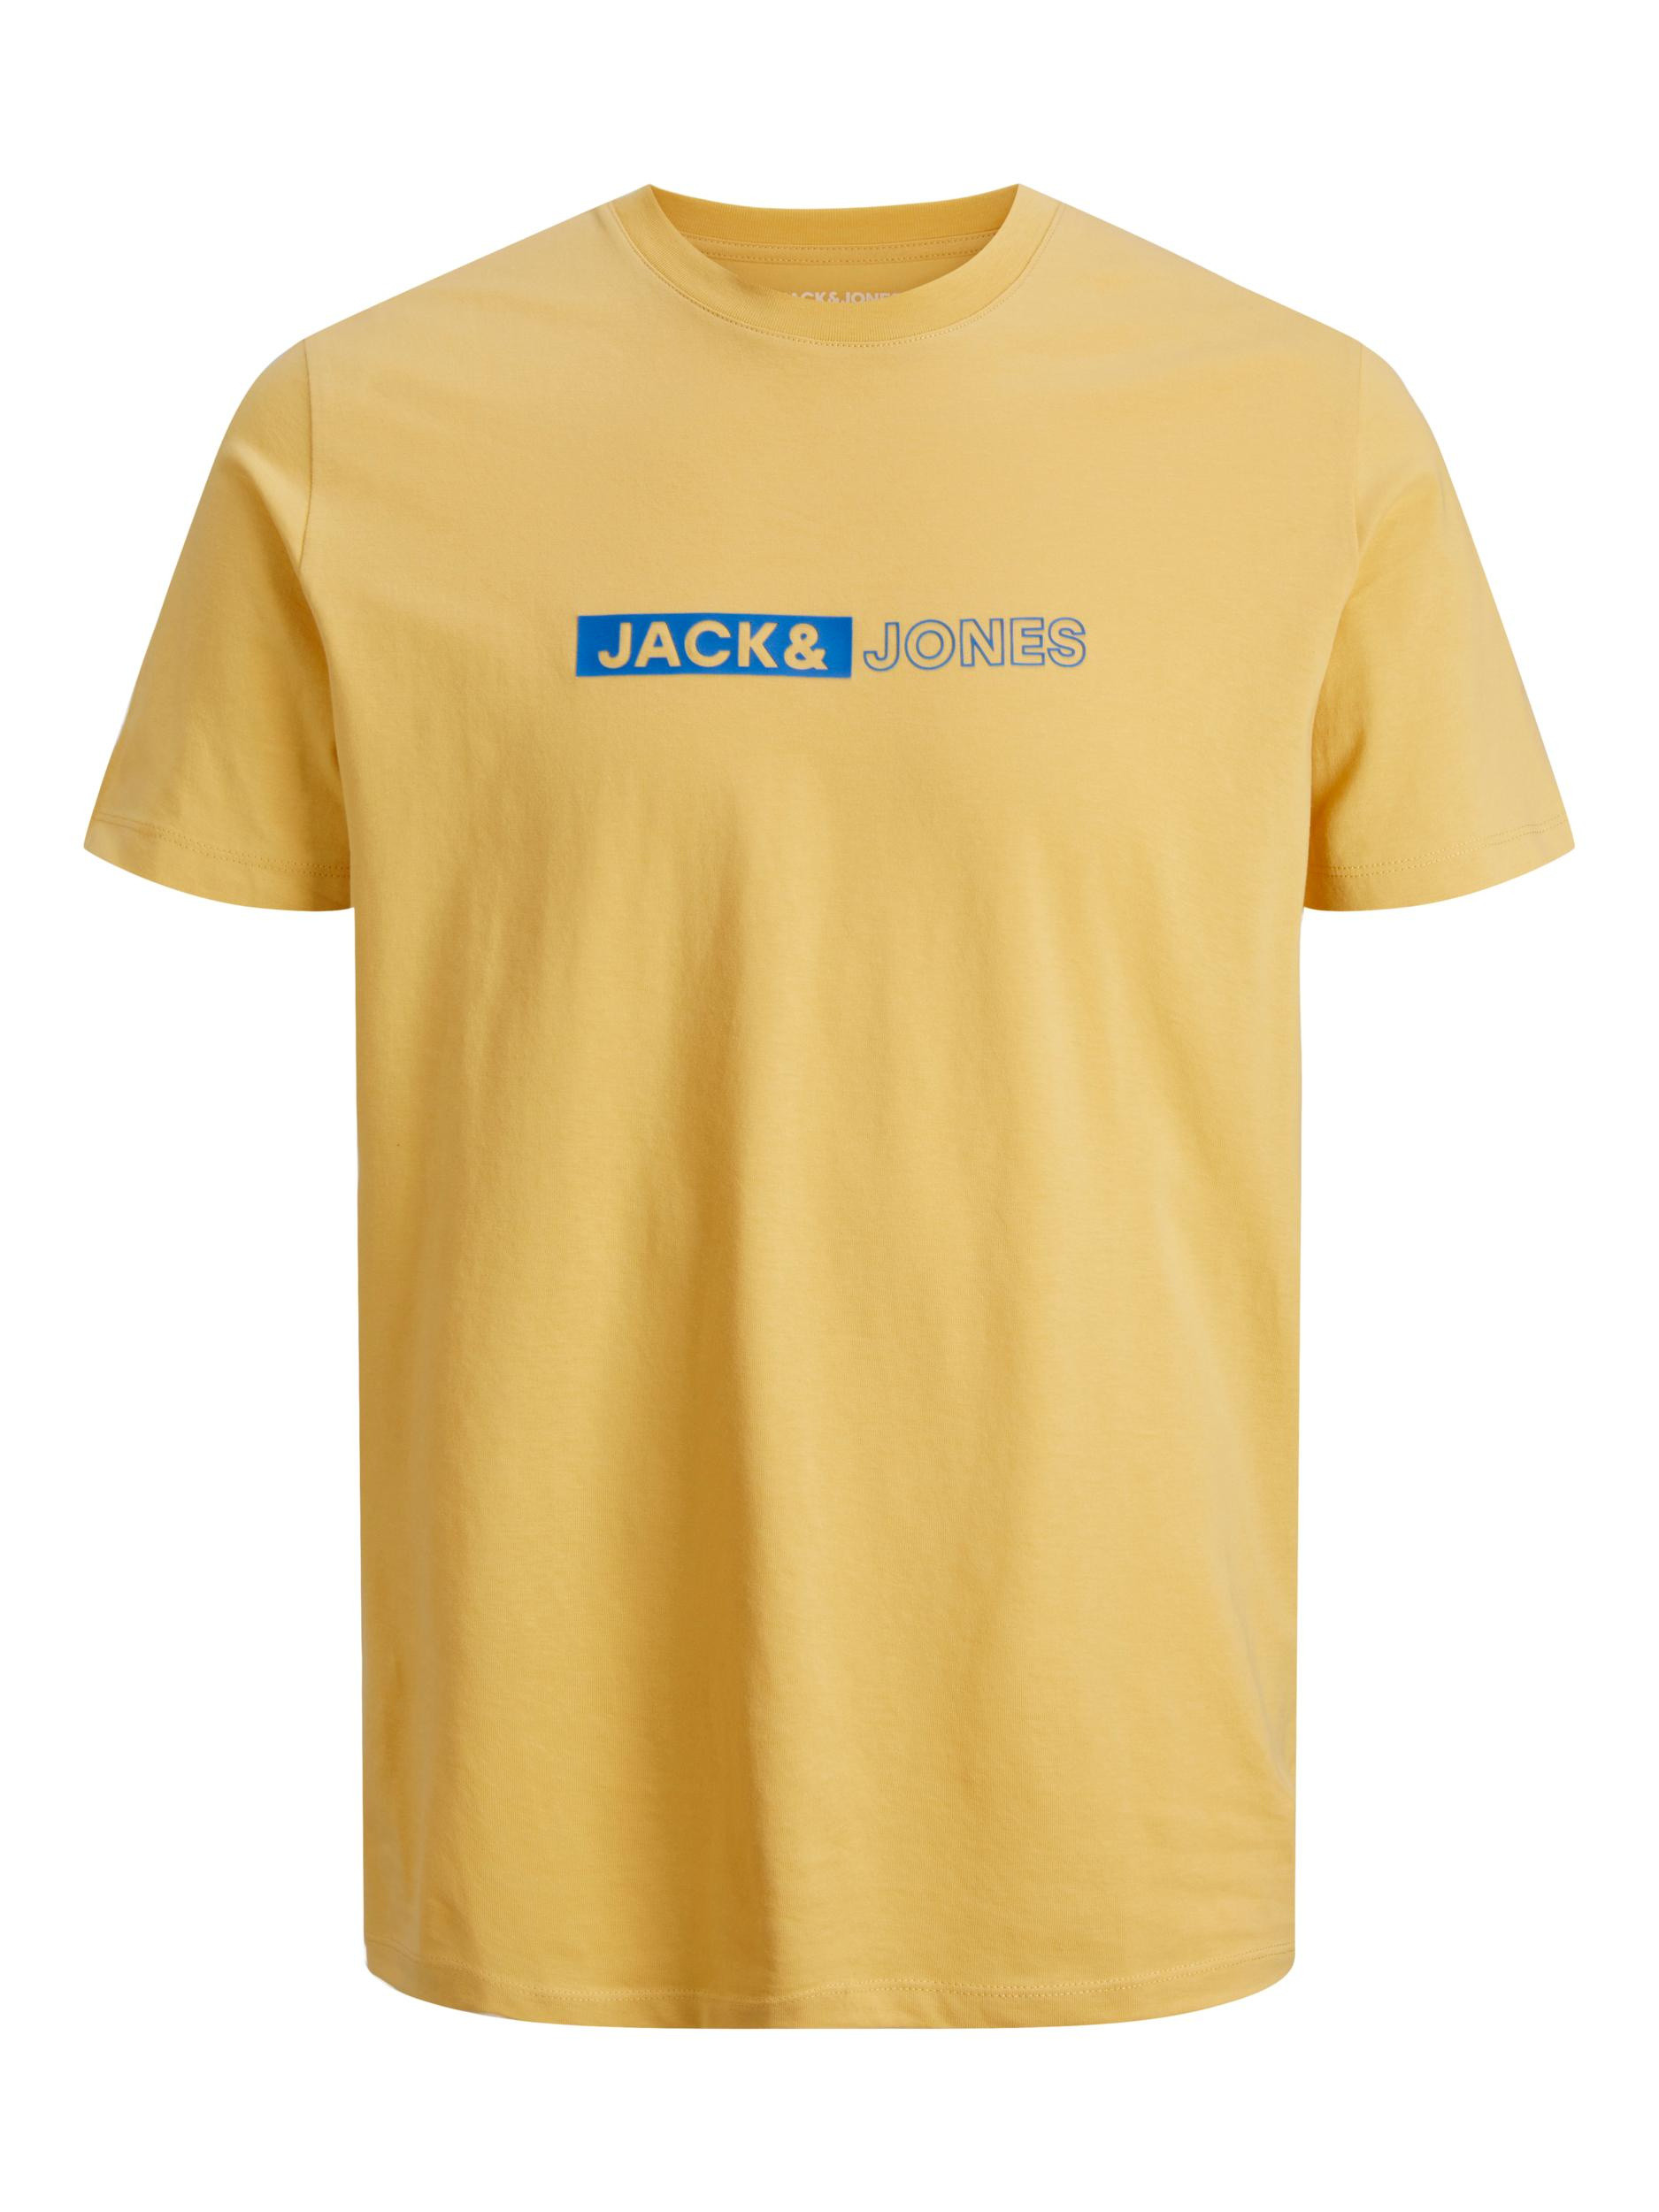 Jack & Jones - T-shirt regular fit in cotone, Giallo, large image number 0